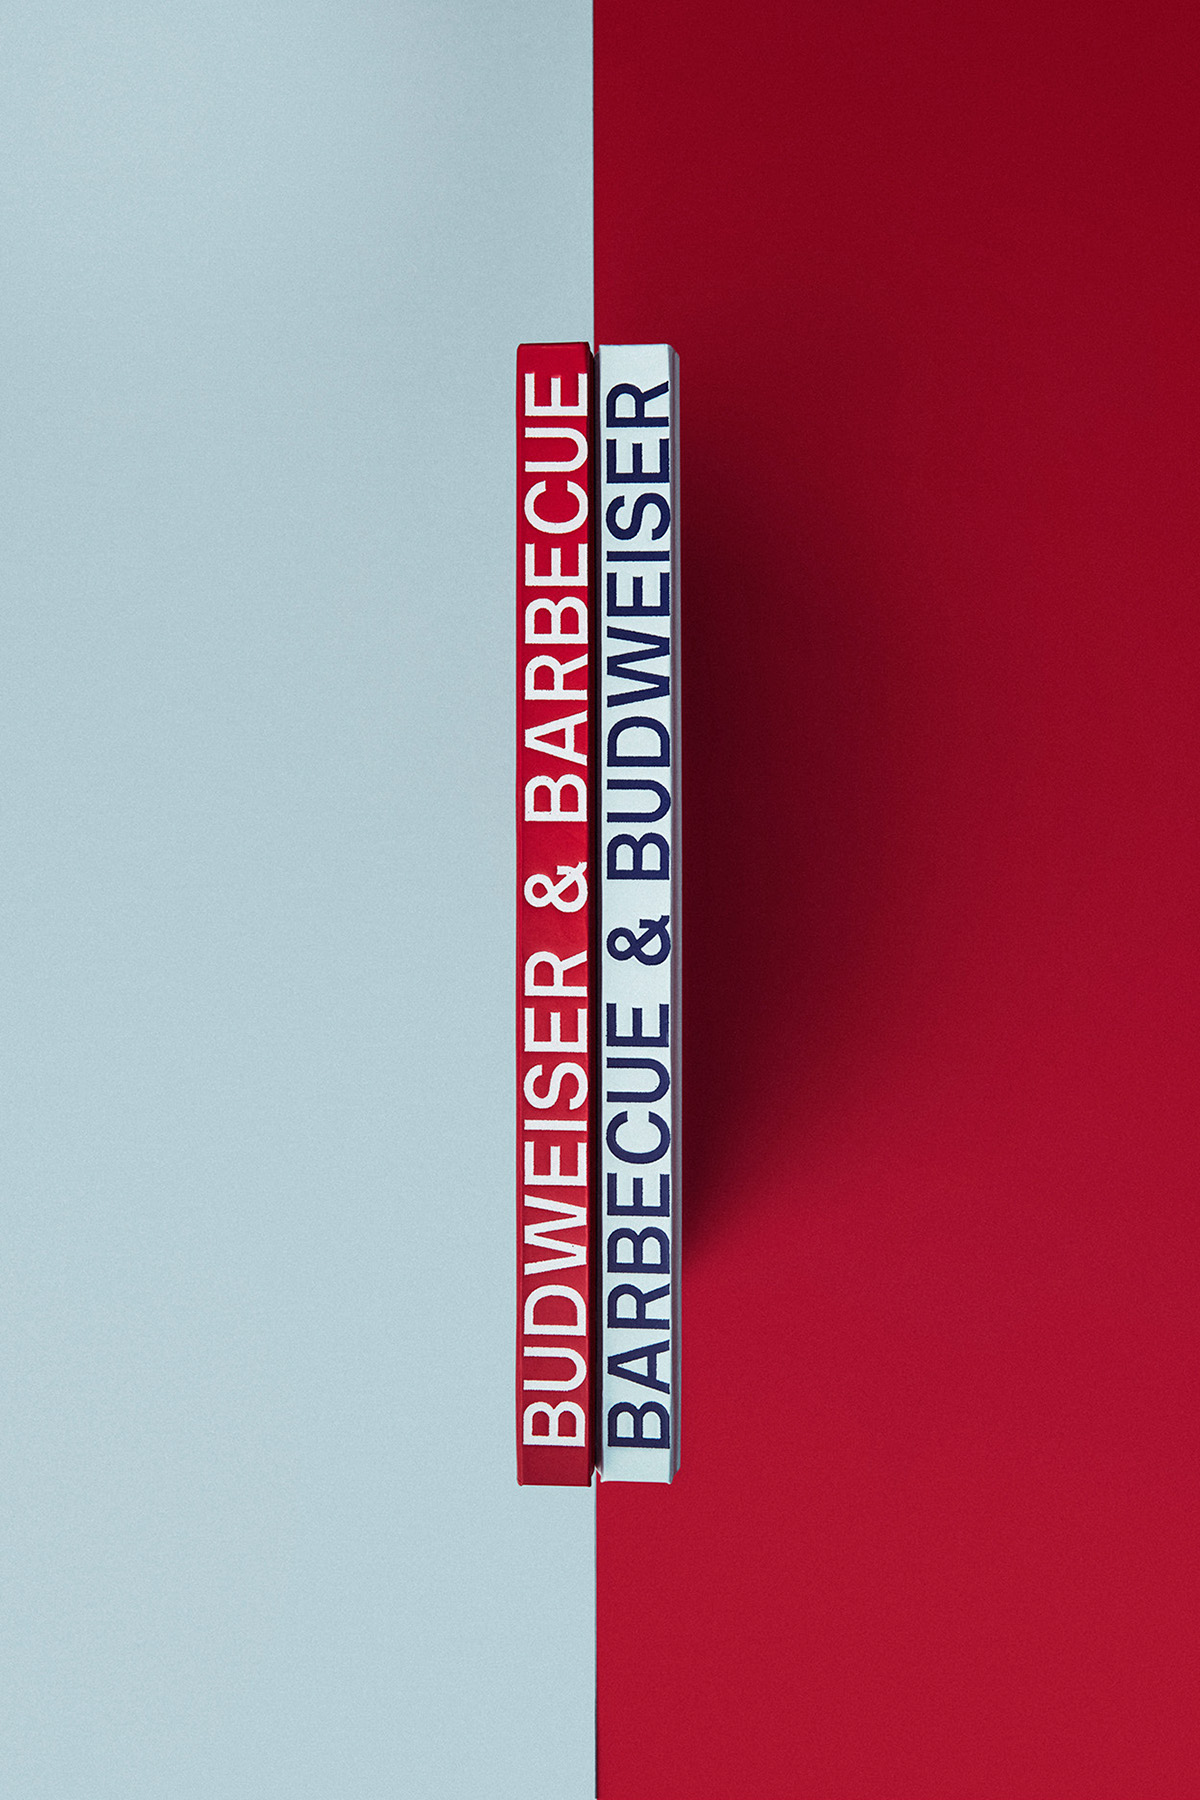 rgb-creative-Budweiser-Barbecue-3